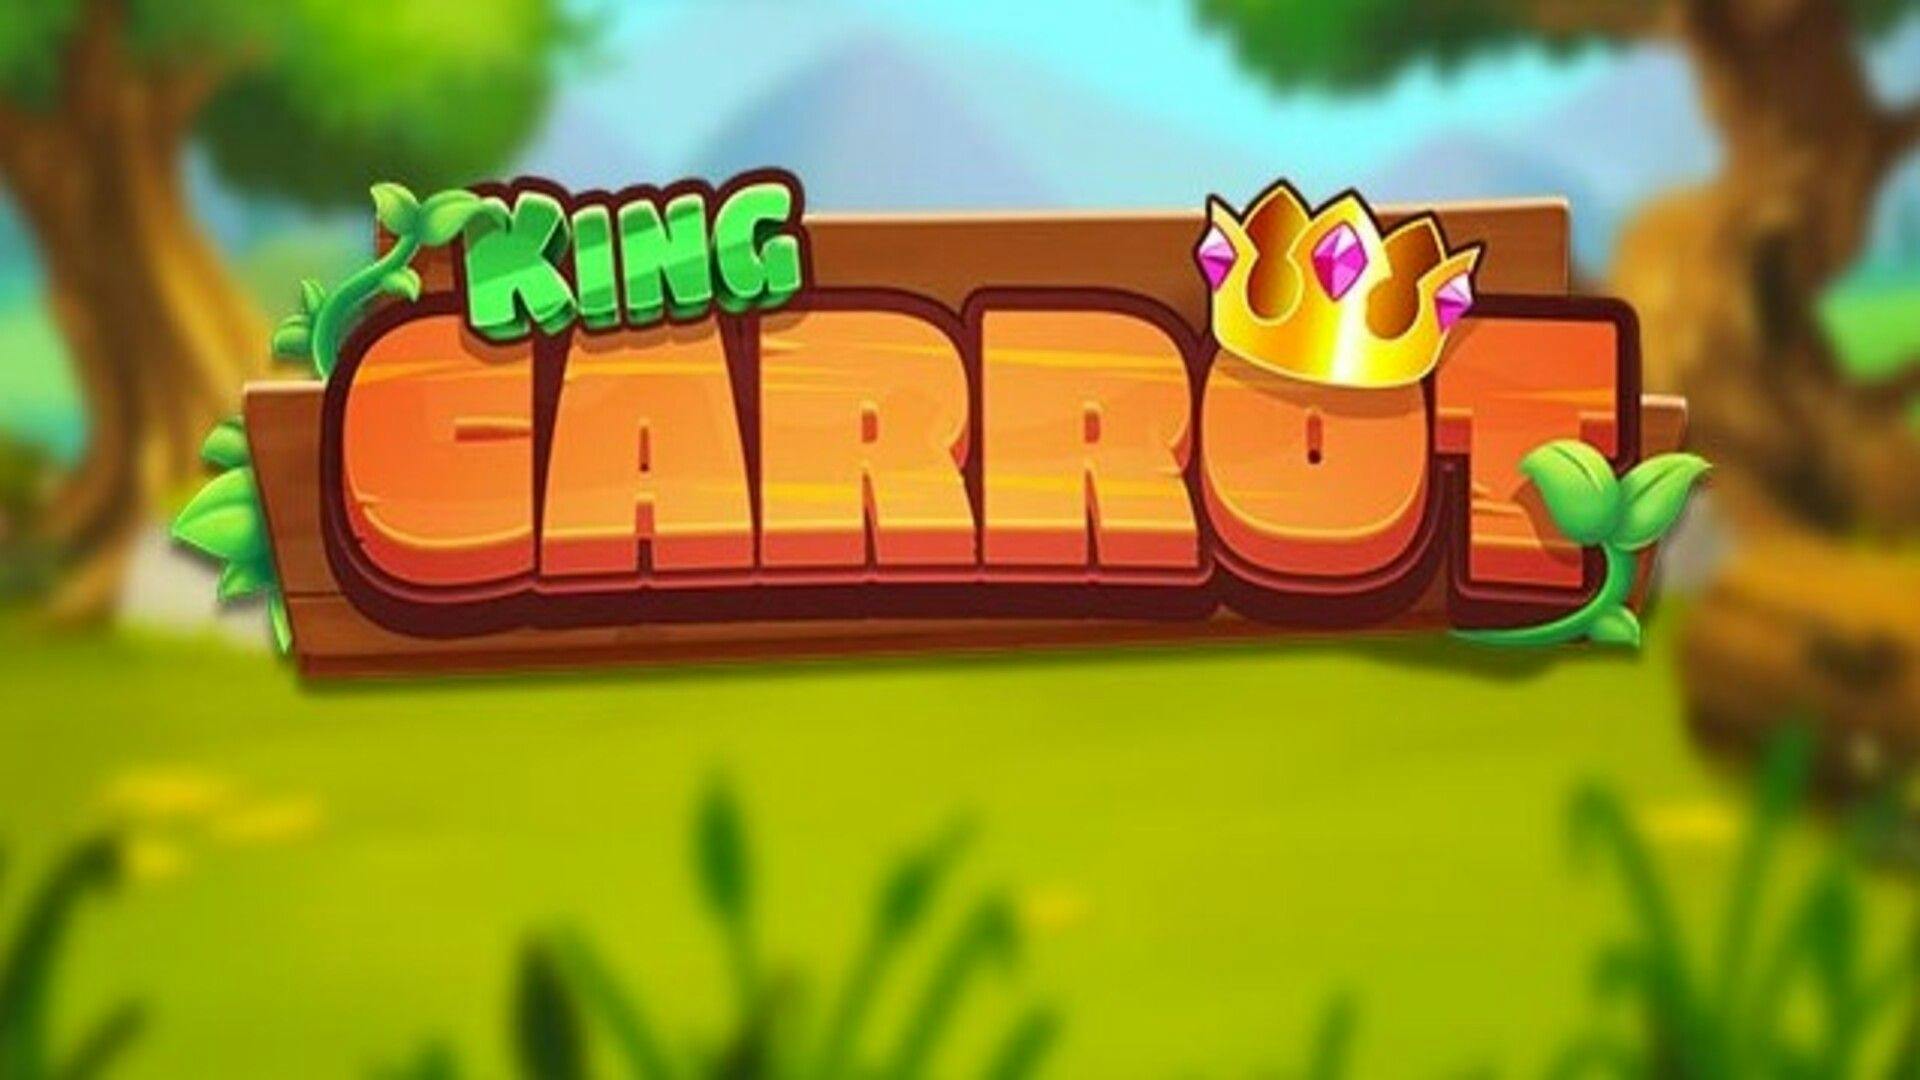 King Carrot Slot Machine Online Free Game Play